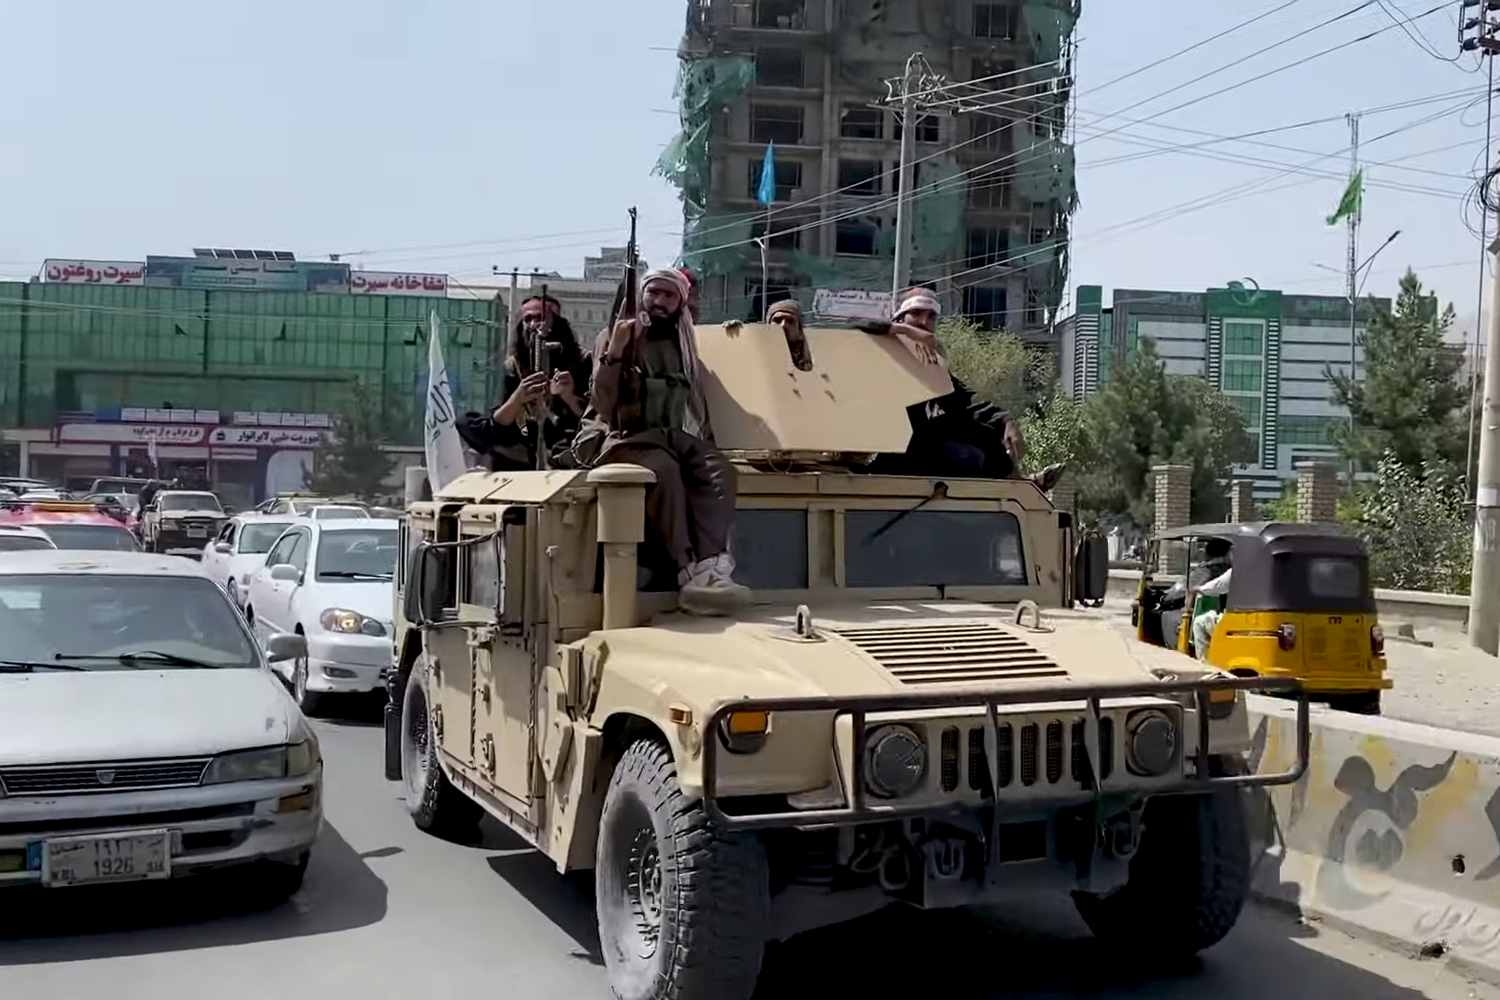 Taliban Humvee in Kabul, August 2021. Photo: Voice of America News, via Wikimedia Commons